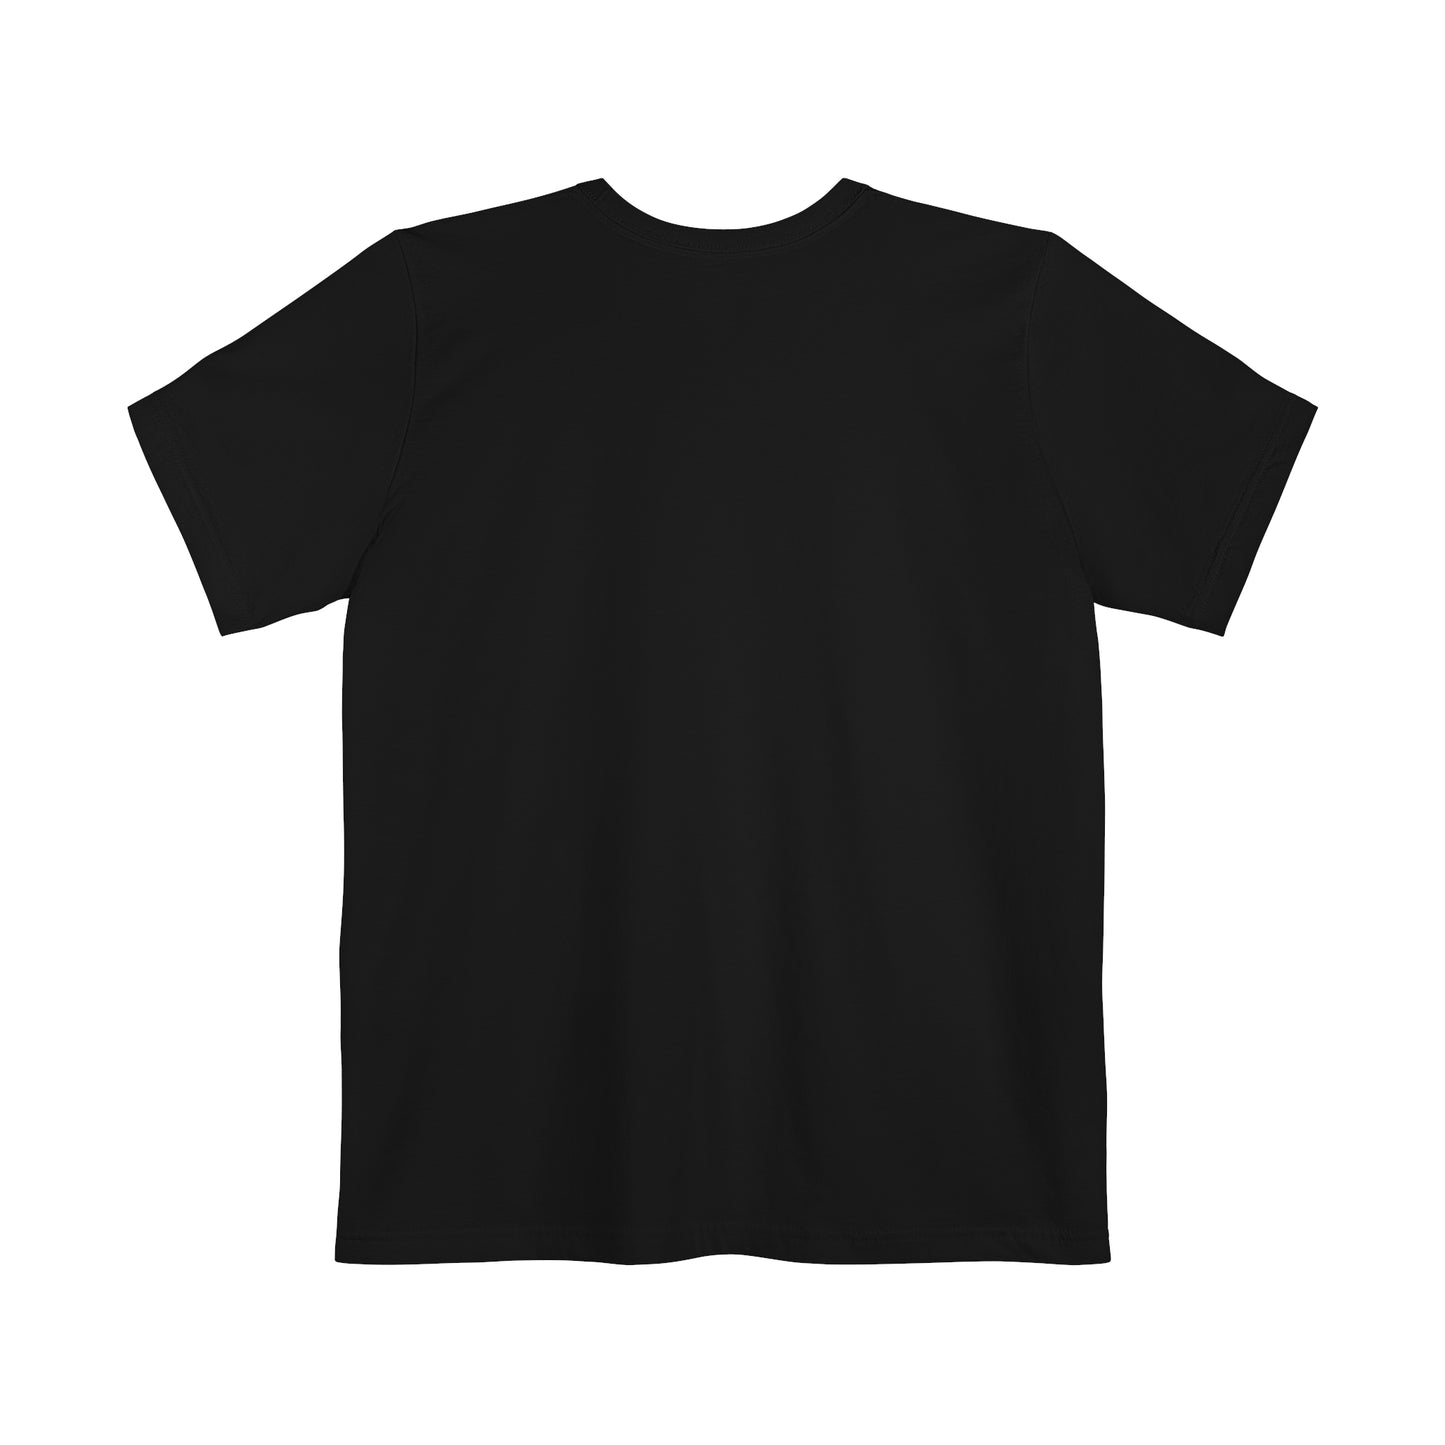 Michigan Upper Peninsula Pocket T-Shirt (w/ Orange UP Outline) | Unisex Standard